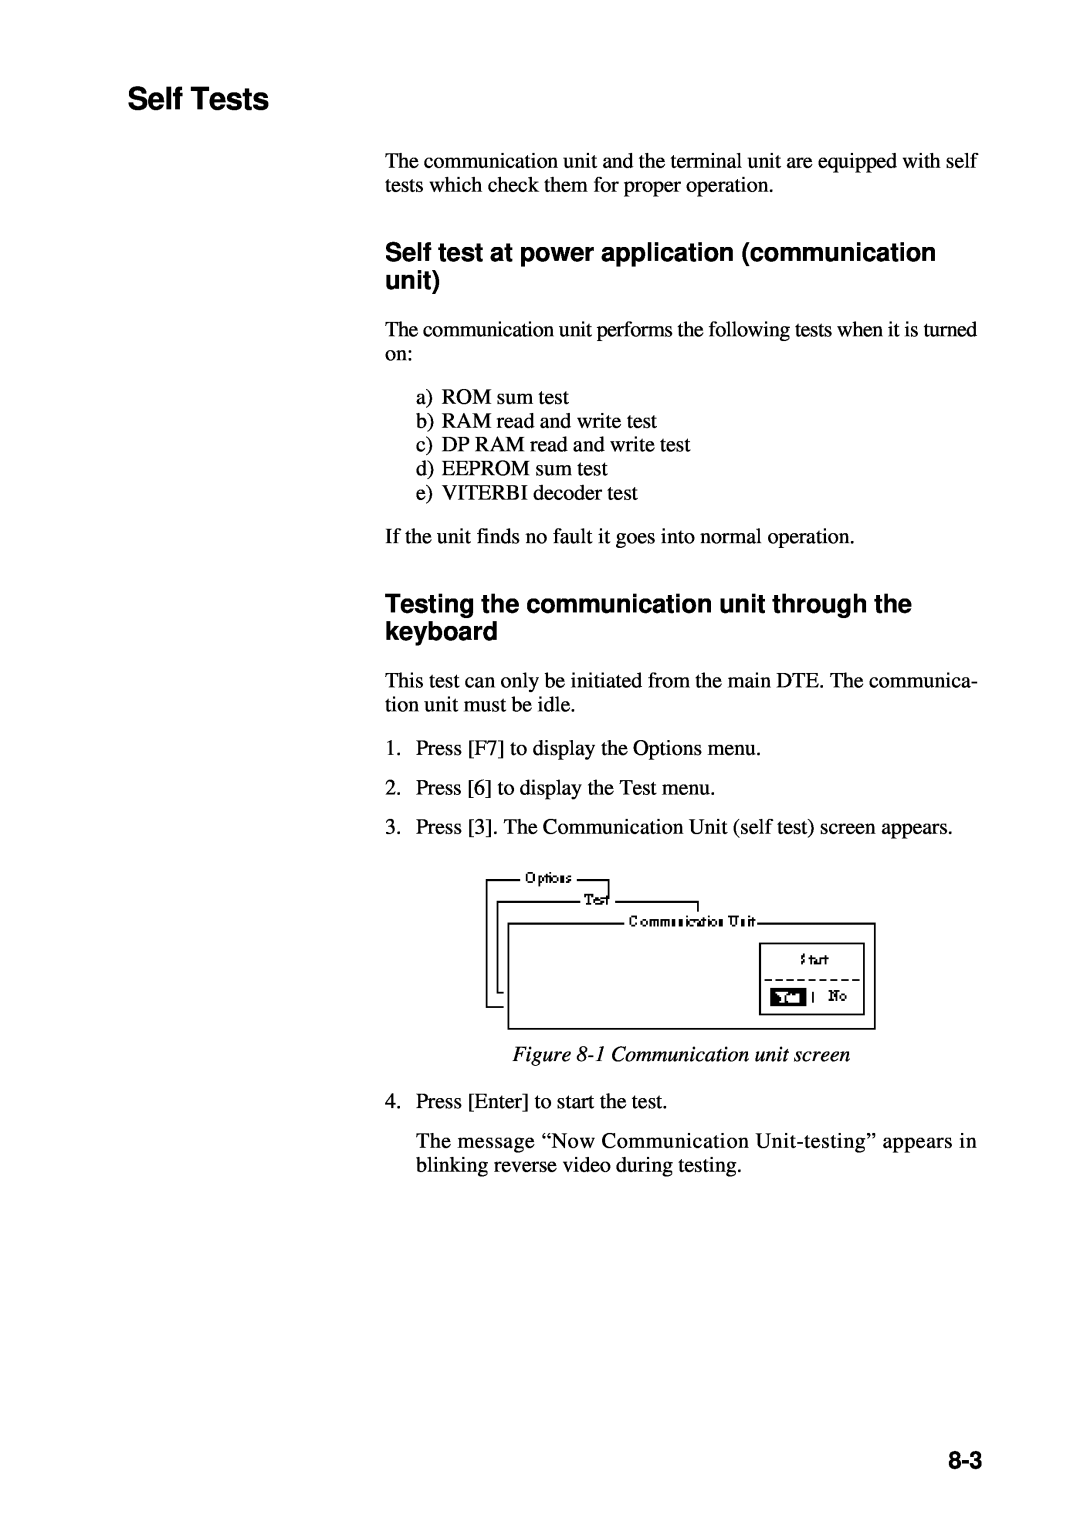 Furuno RC-1500-1T manual Self Tests, Self test at power application communication unit, 1 Communication unit screen 